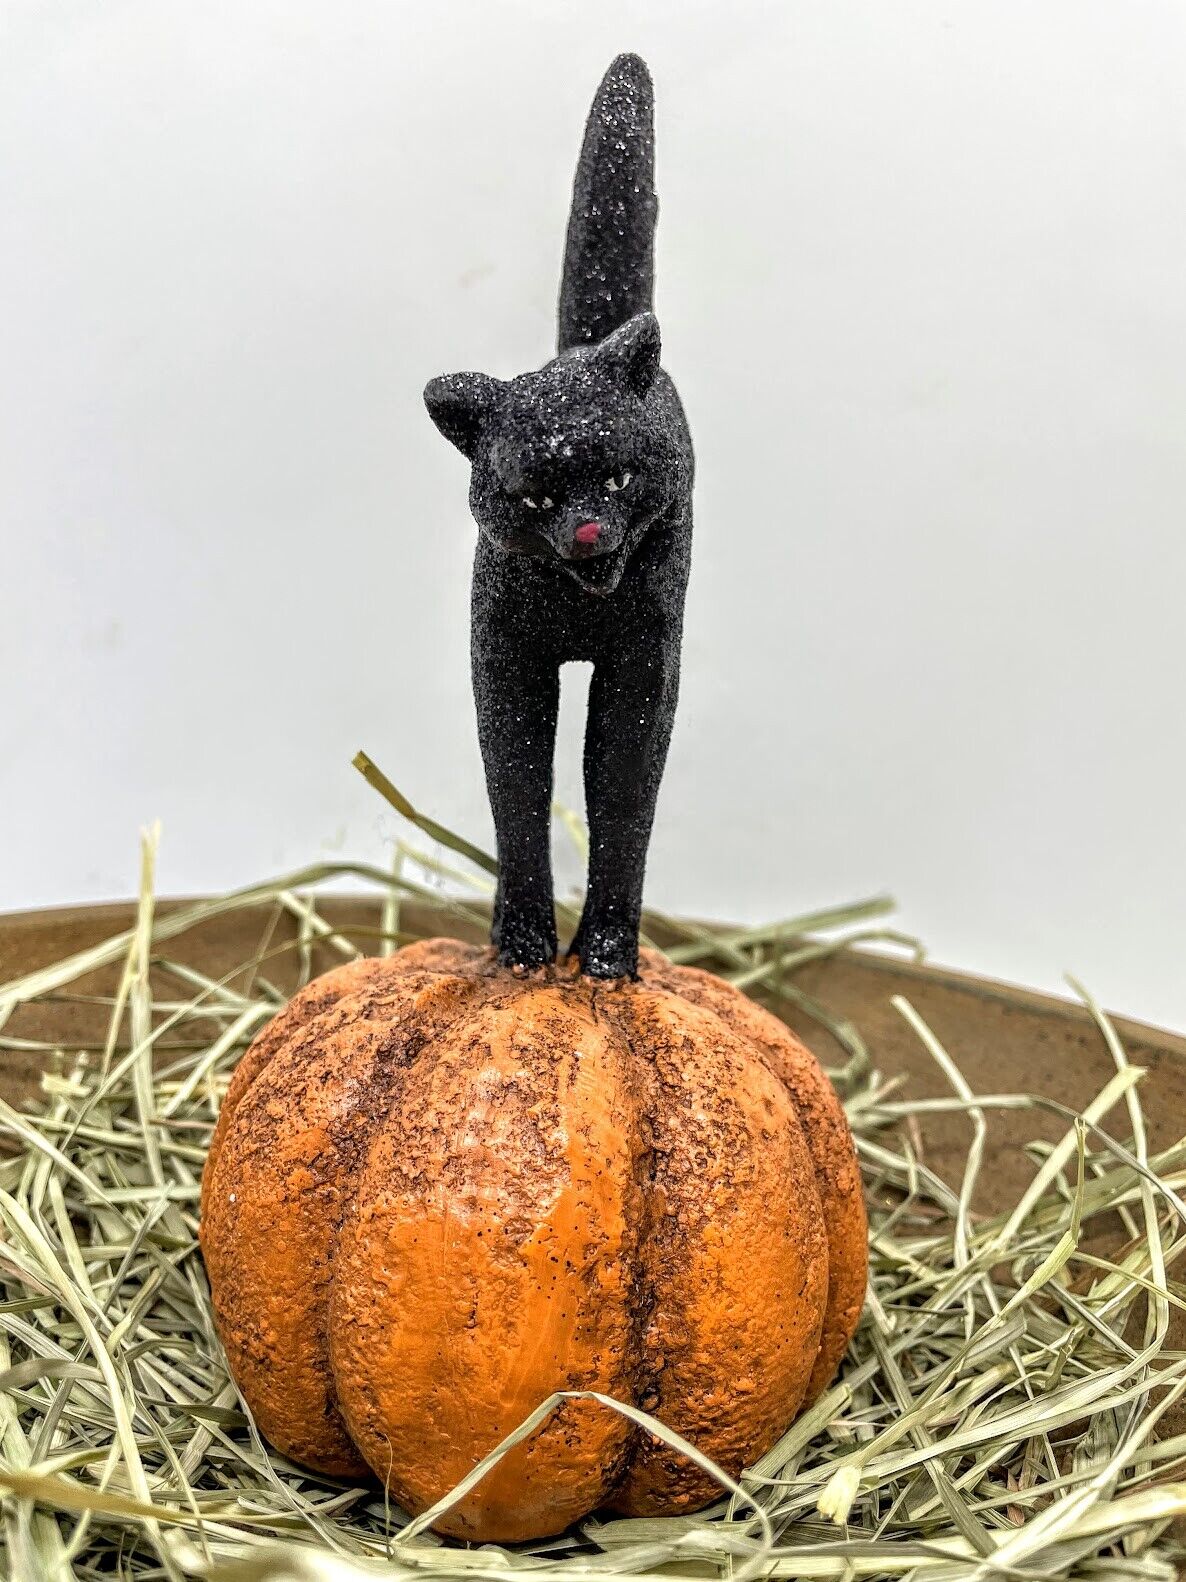 Primitive Country Black Bobble Head Halloween Cat on Pumpkin 8&quot; x 4&quot; - The Primitive Pineapple Collection